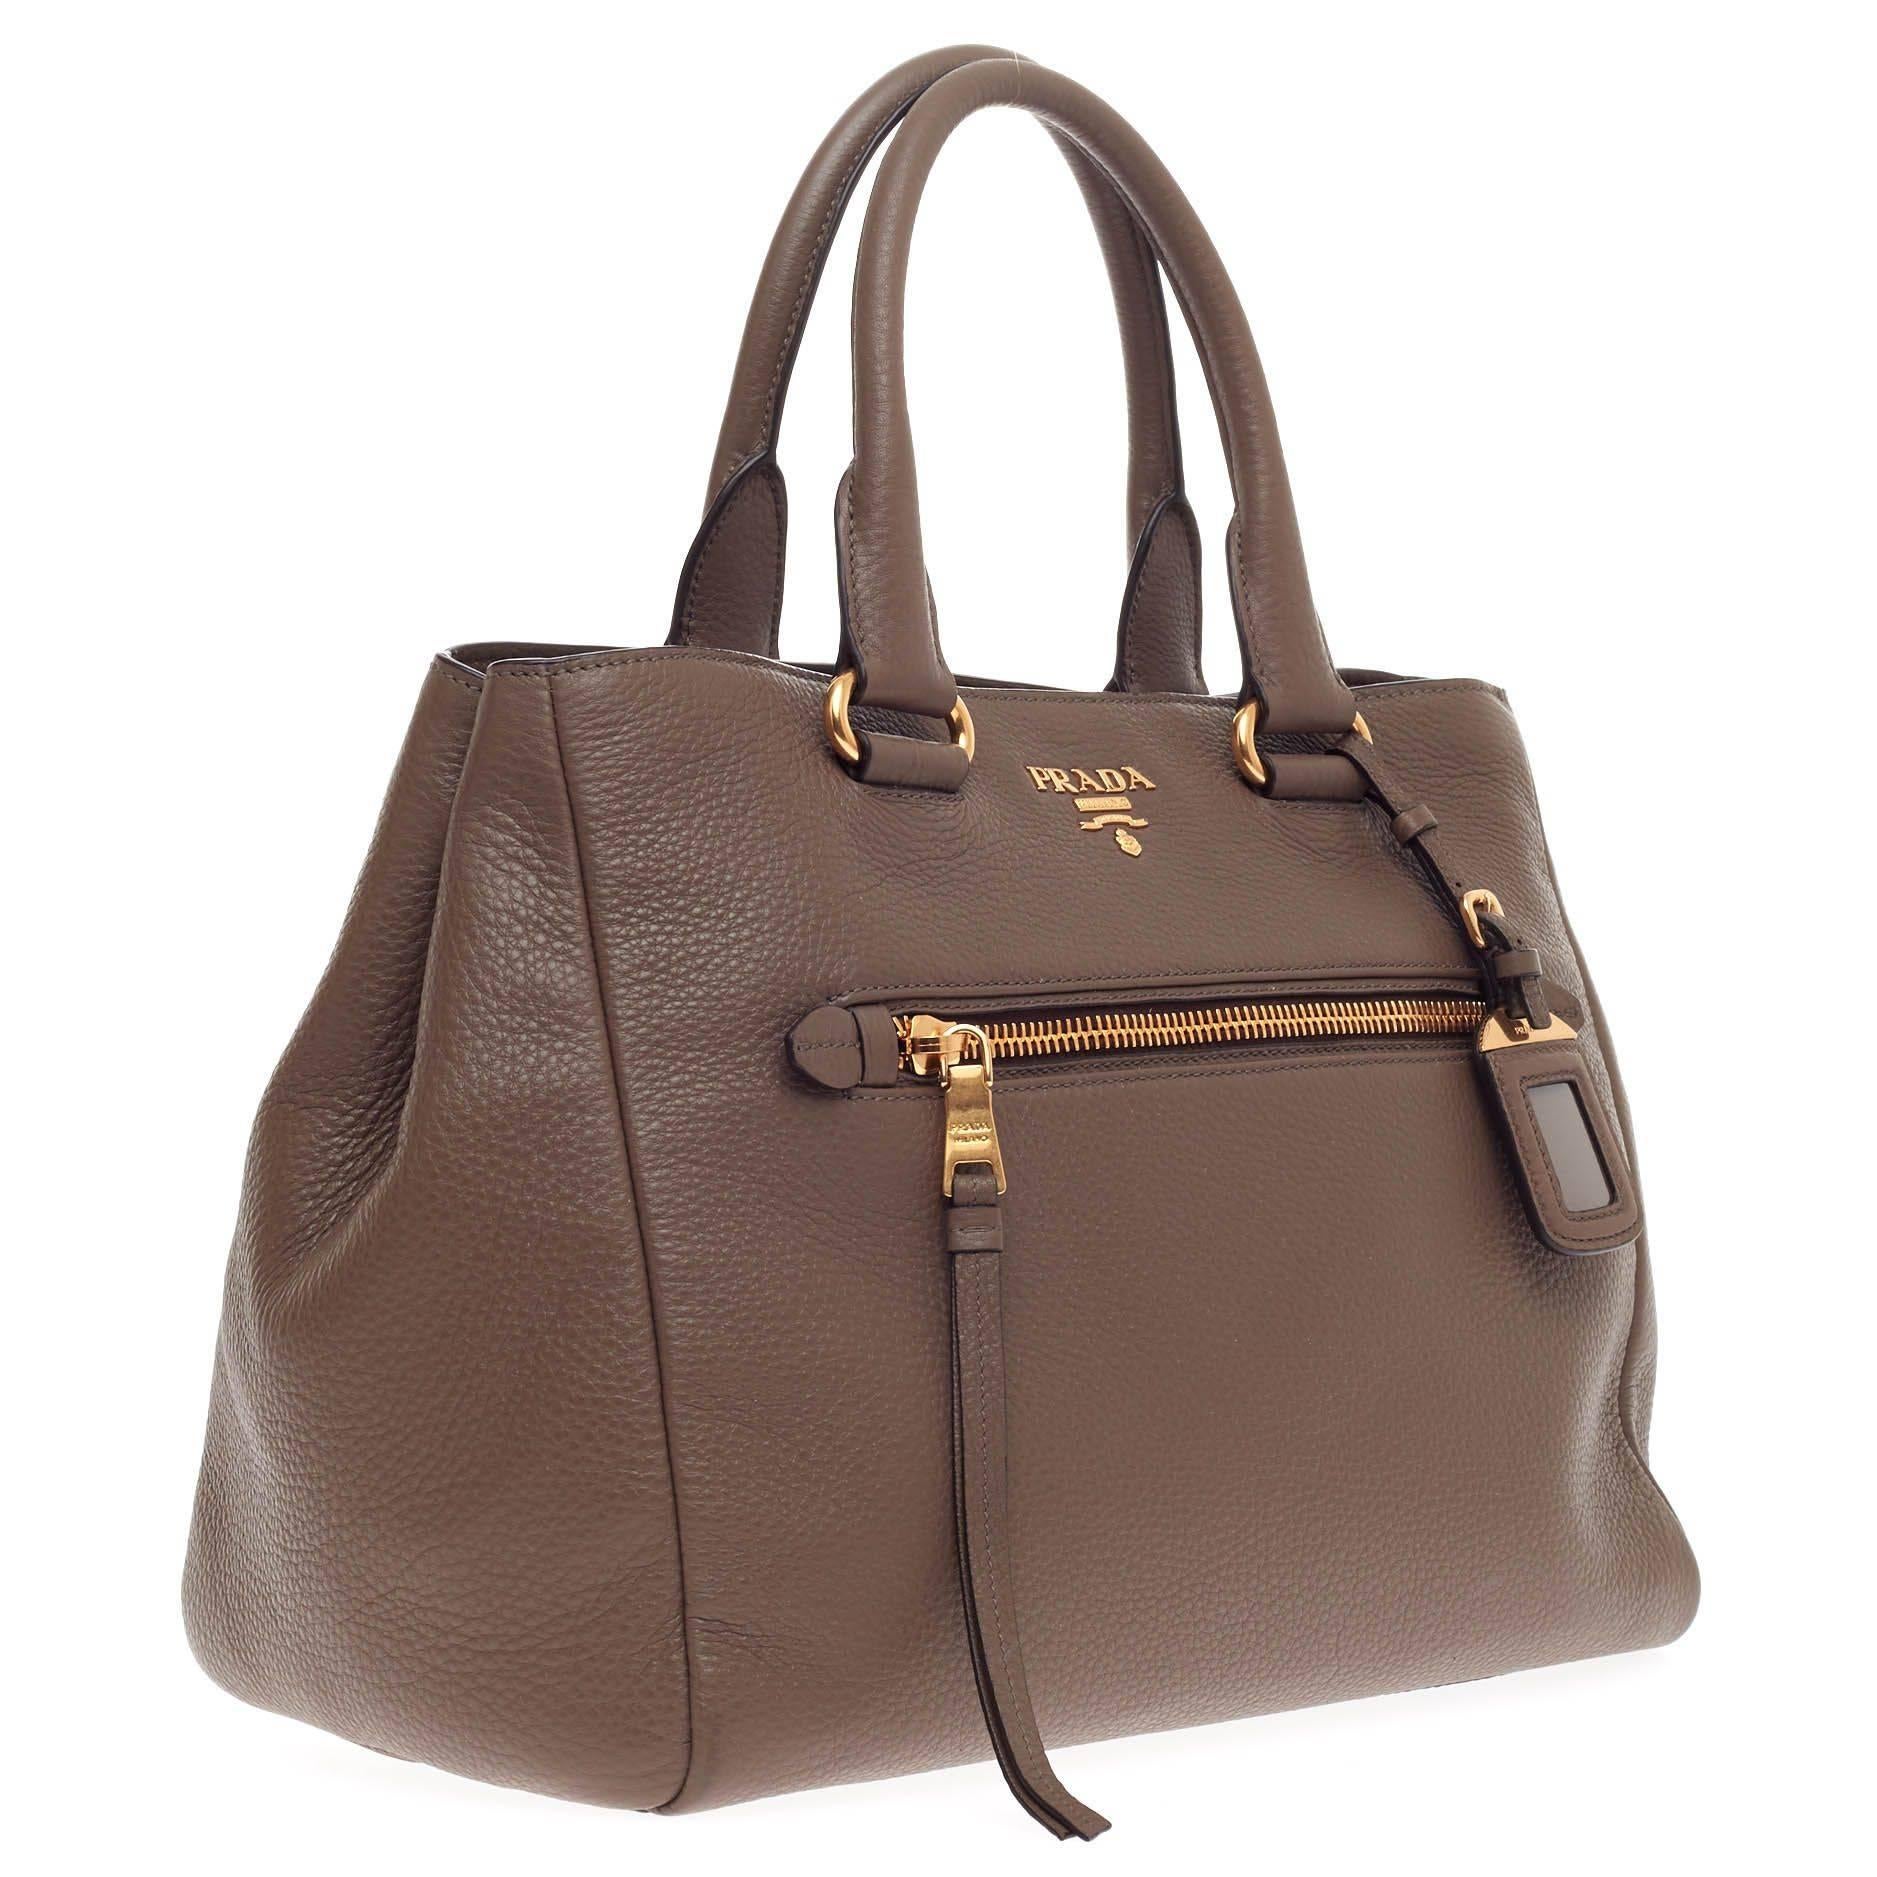 handbag with front pocket